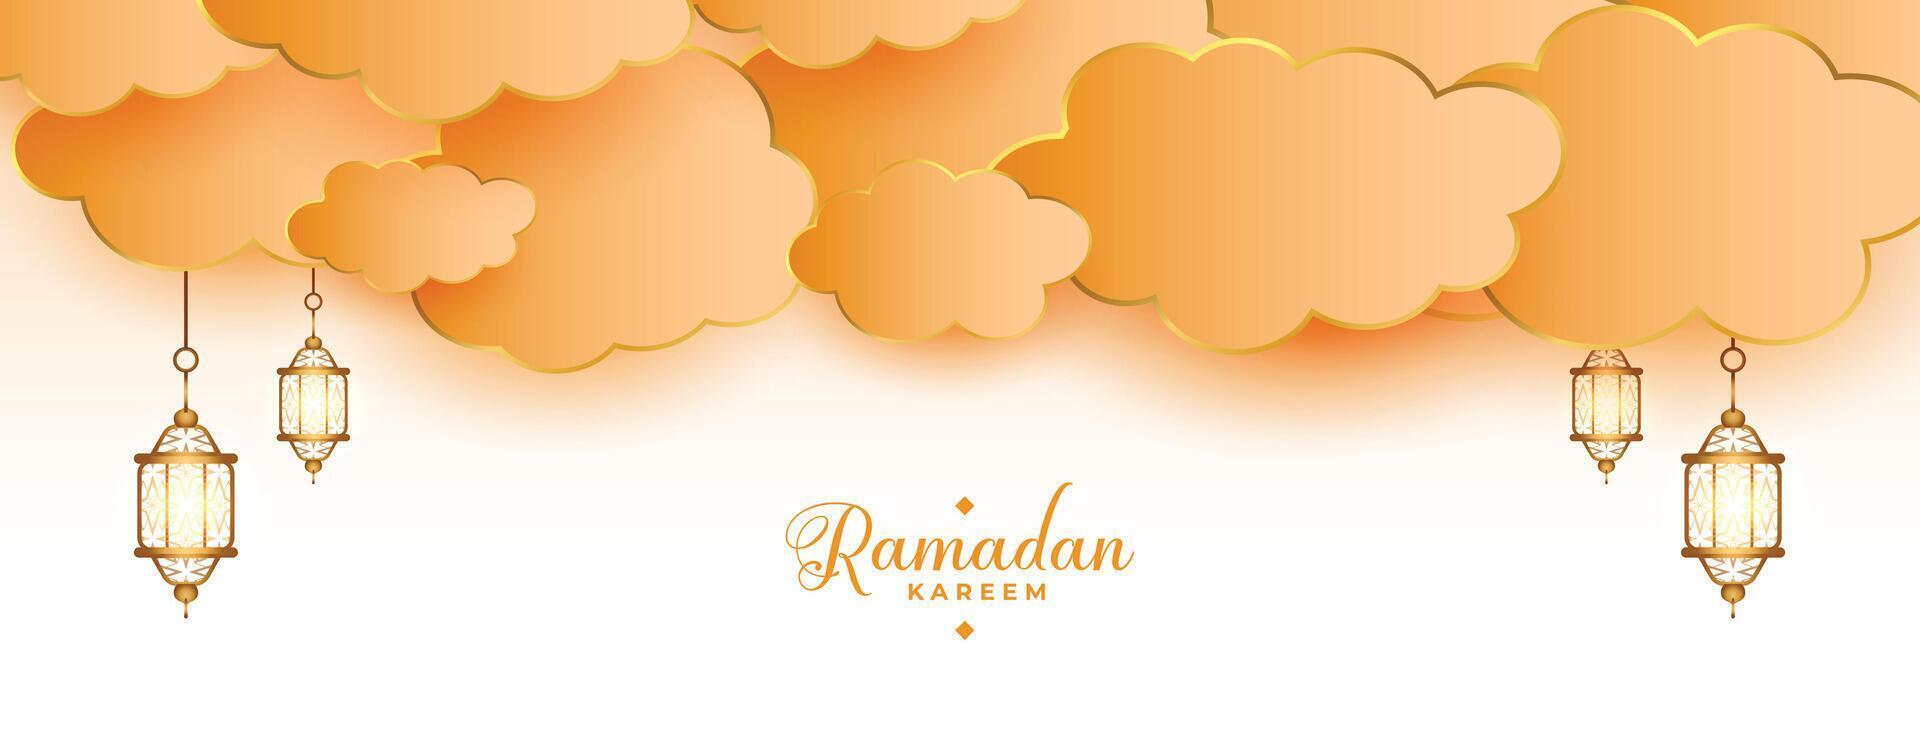 ramadan kareem islamic lanterns and clouds banner design vector